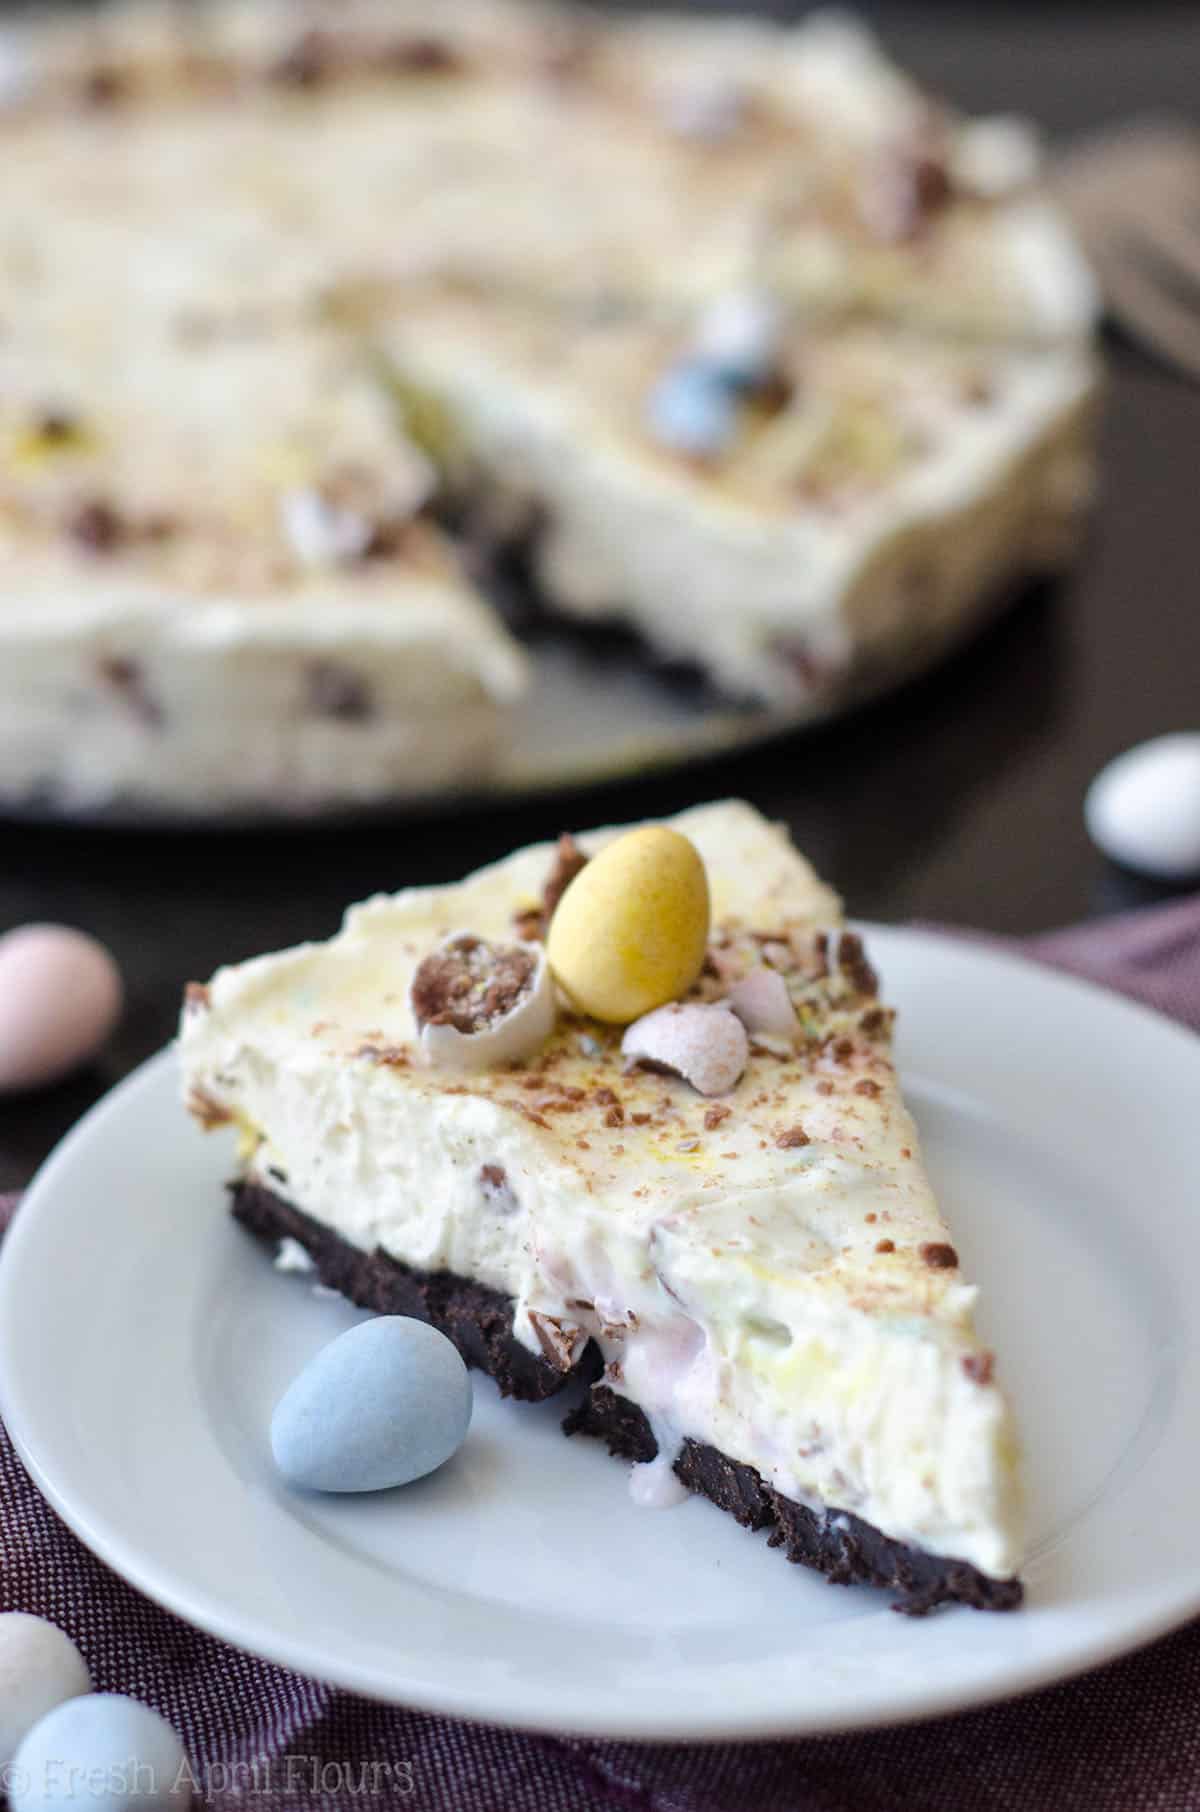 No Bake Cadbury Egg Pie: A creamy no bake pie filled with chopped Cadbury Mini Eggs-- perfect for Easter! via @frshaprilflours